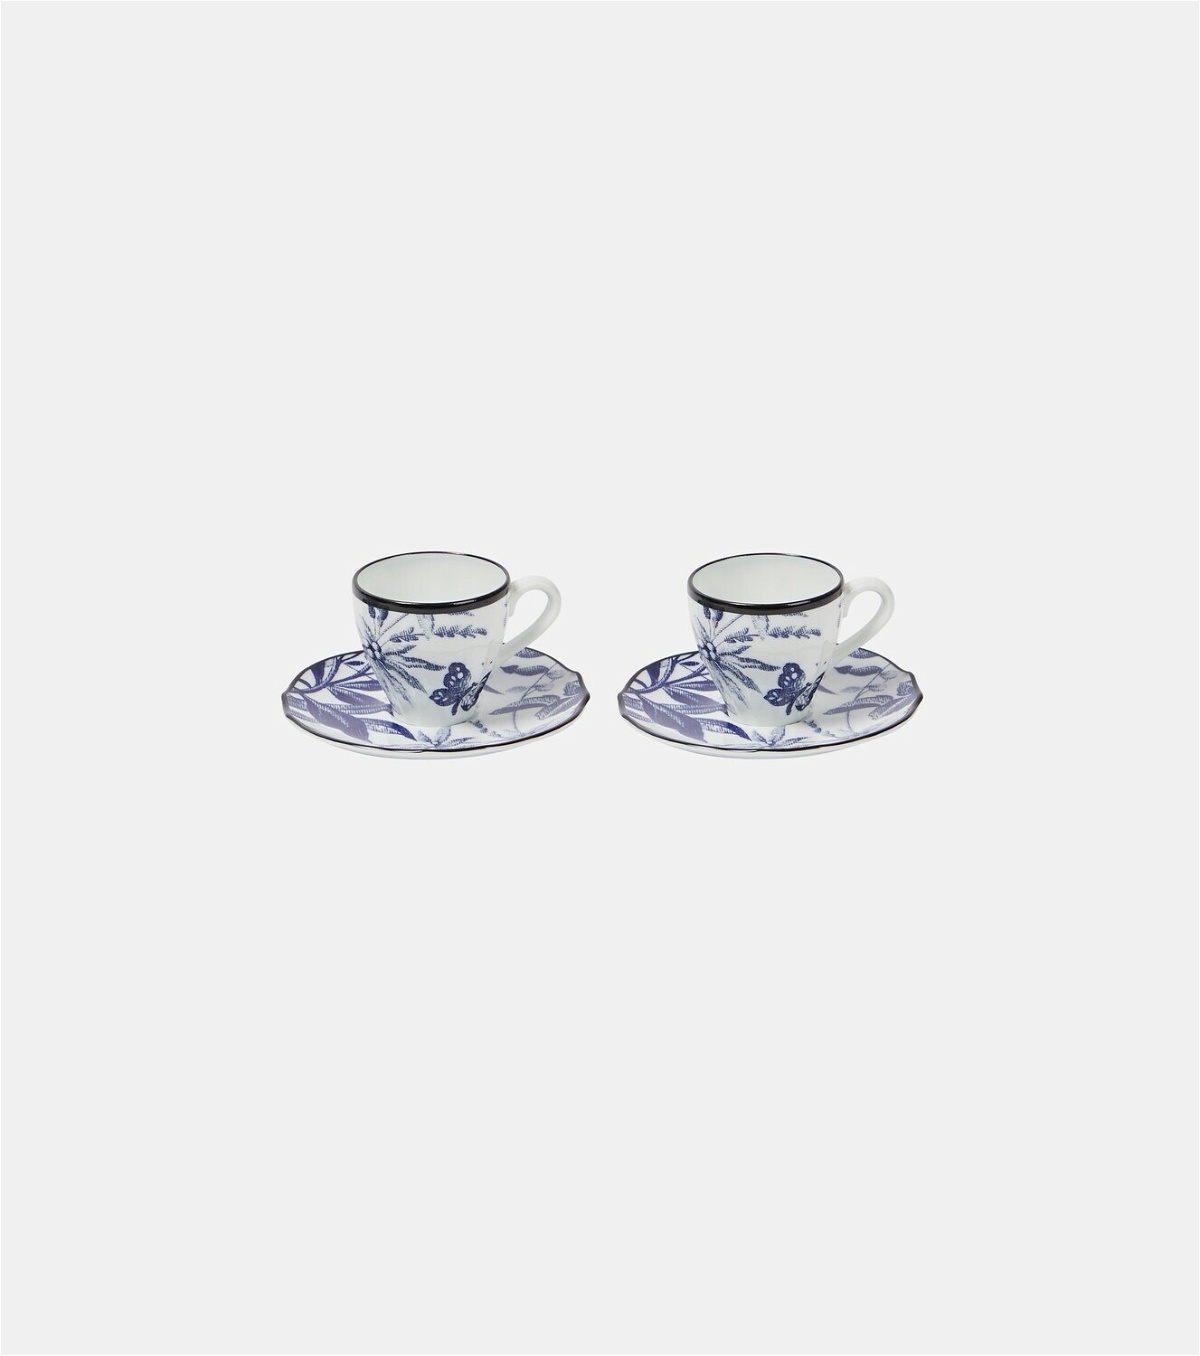 Gucci Herbarium set of teacup and saucer